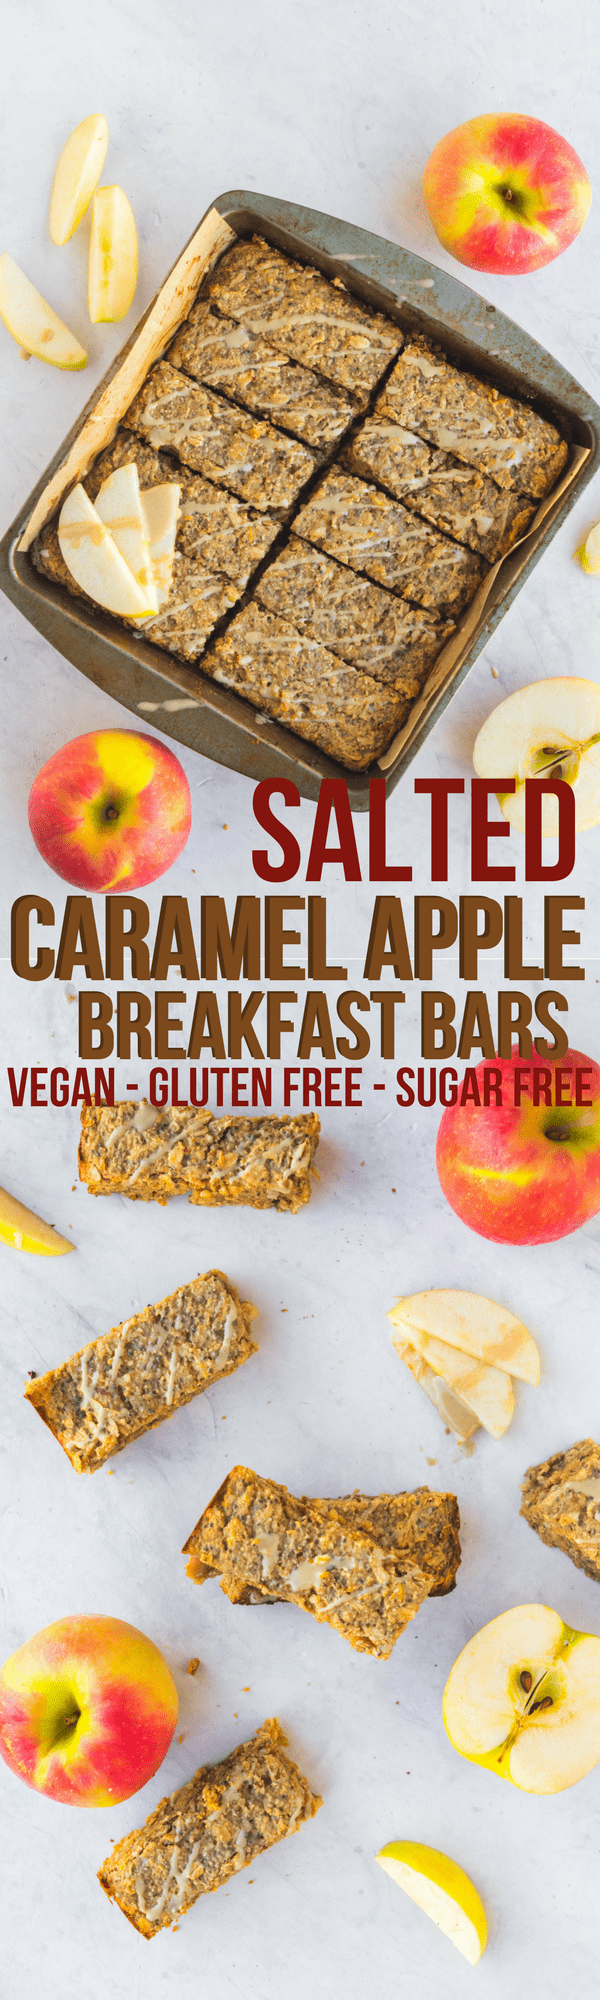 Salted Caramel Apple Breakfast Bars - Easy Vegan Meal Prep #vegan #plantbased